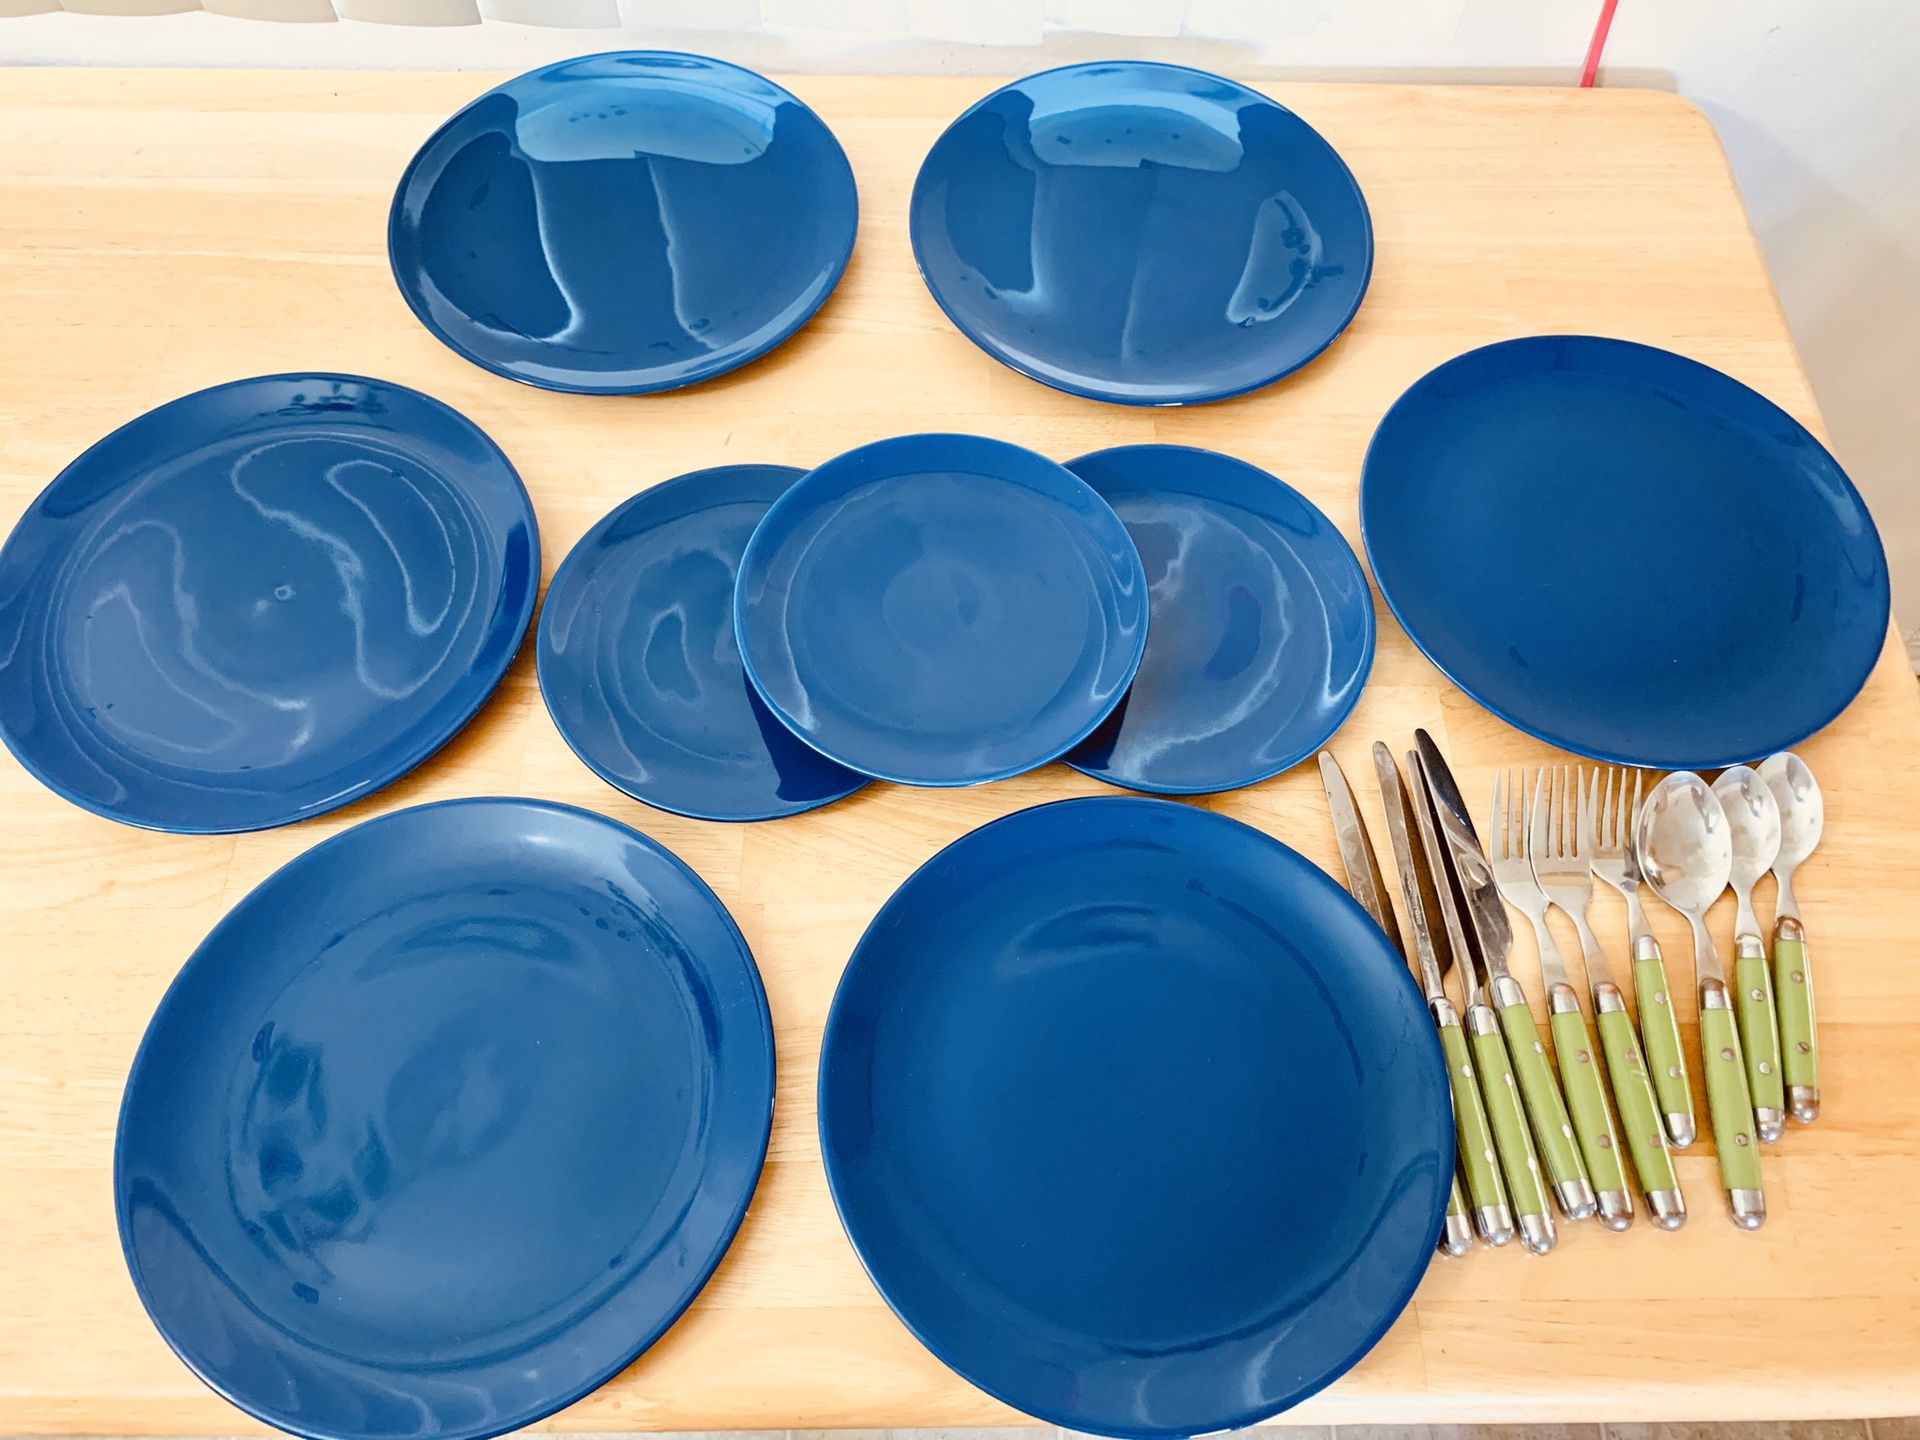 Beautiful 13 piece Dinnerware set with utensils